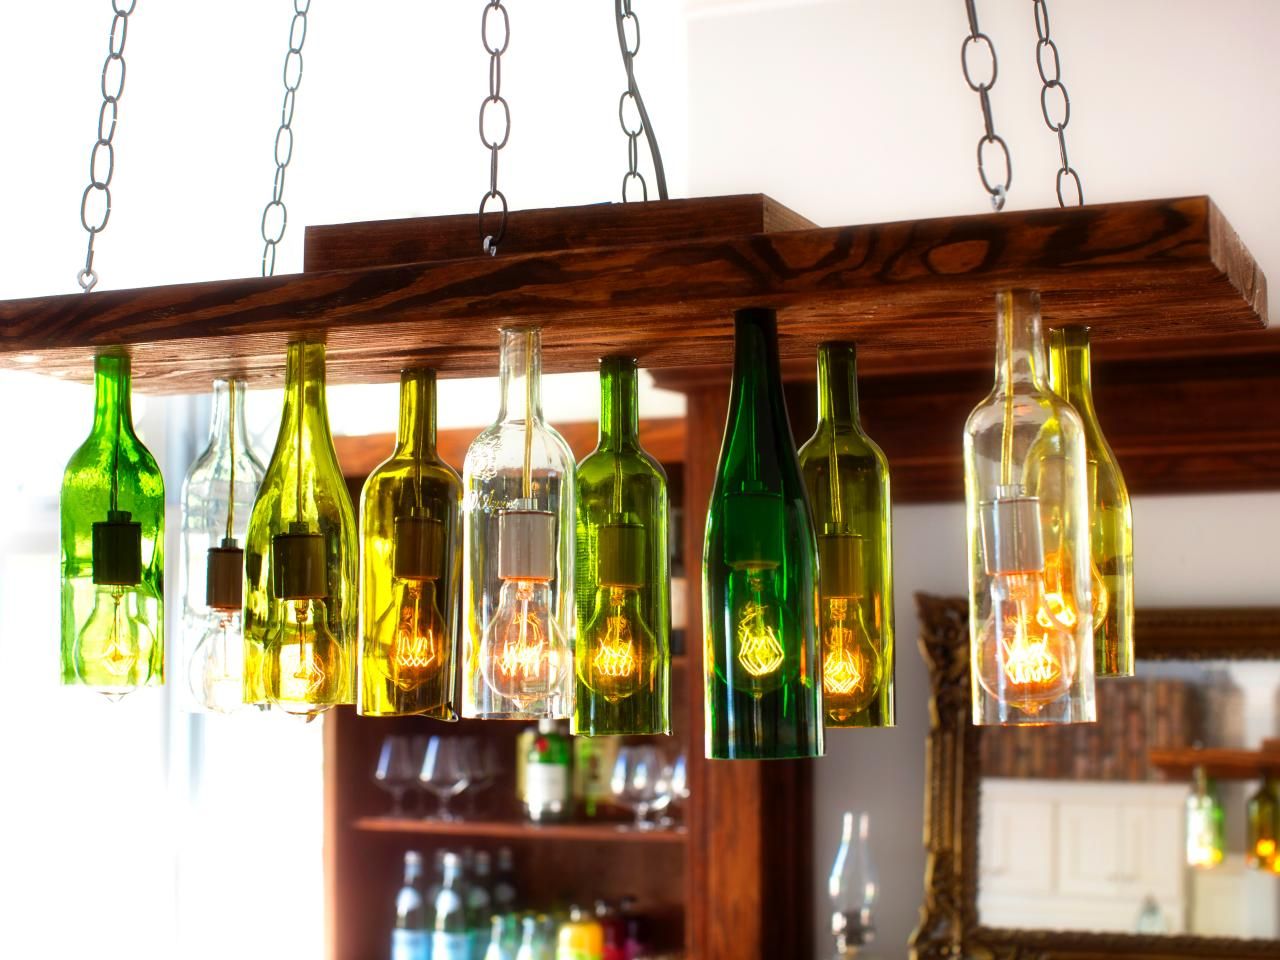 Wine bottles turned into chandelier lighting